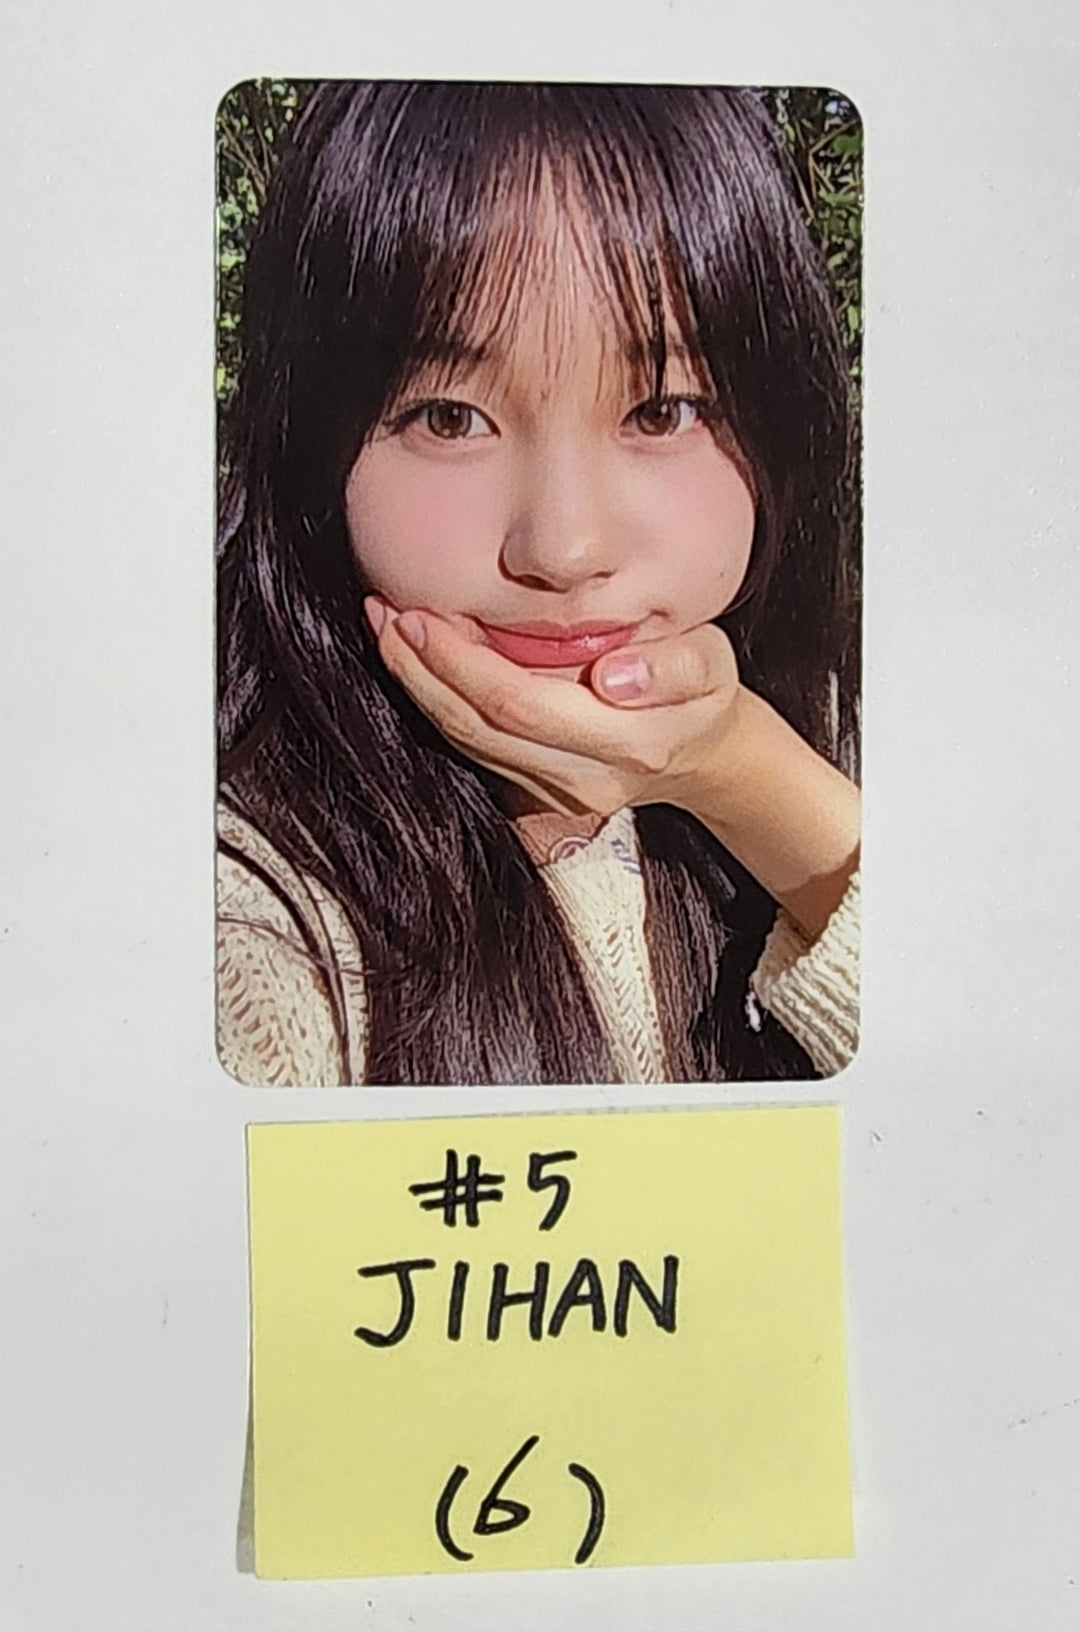 Weeekly 5th Mini "ColoRise" - Official Photocard (Lee Jaehee, Jihan, Zoa, Unit) [Updated 24.1.9] [23.11.02]